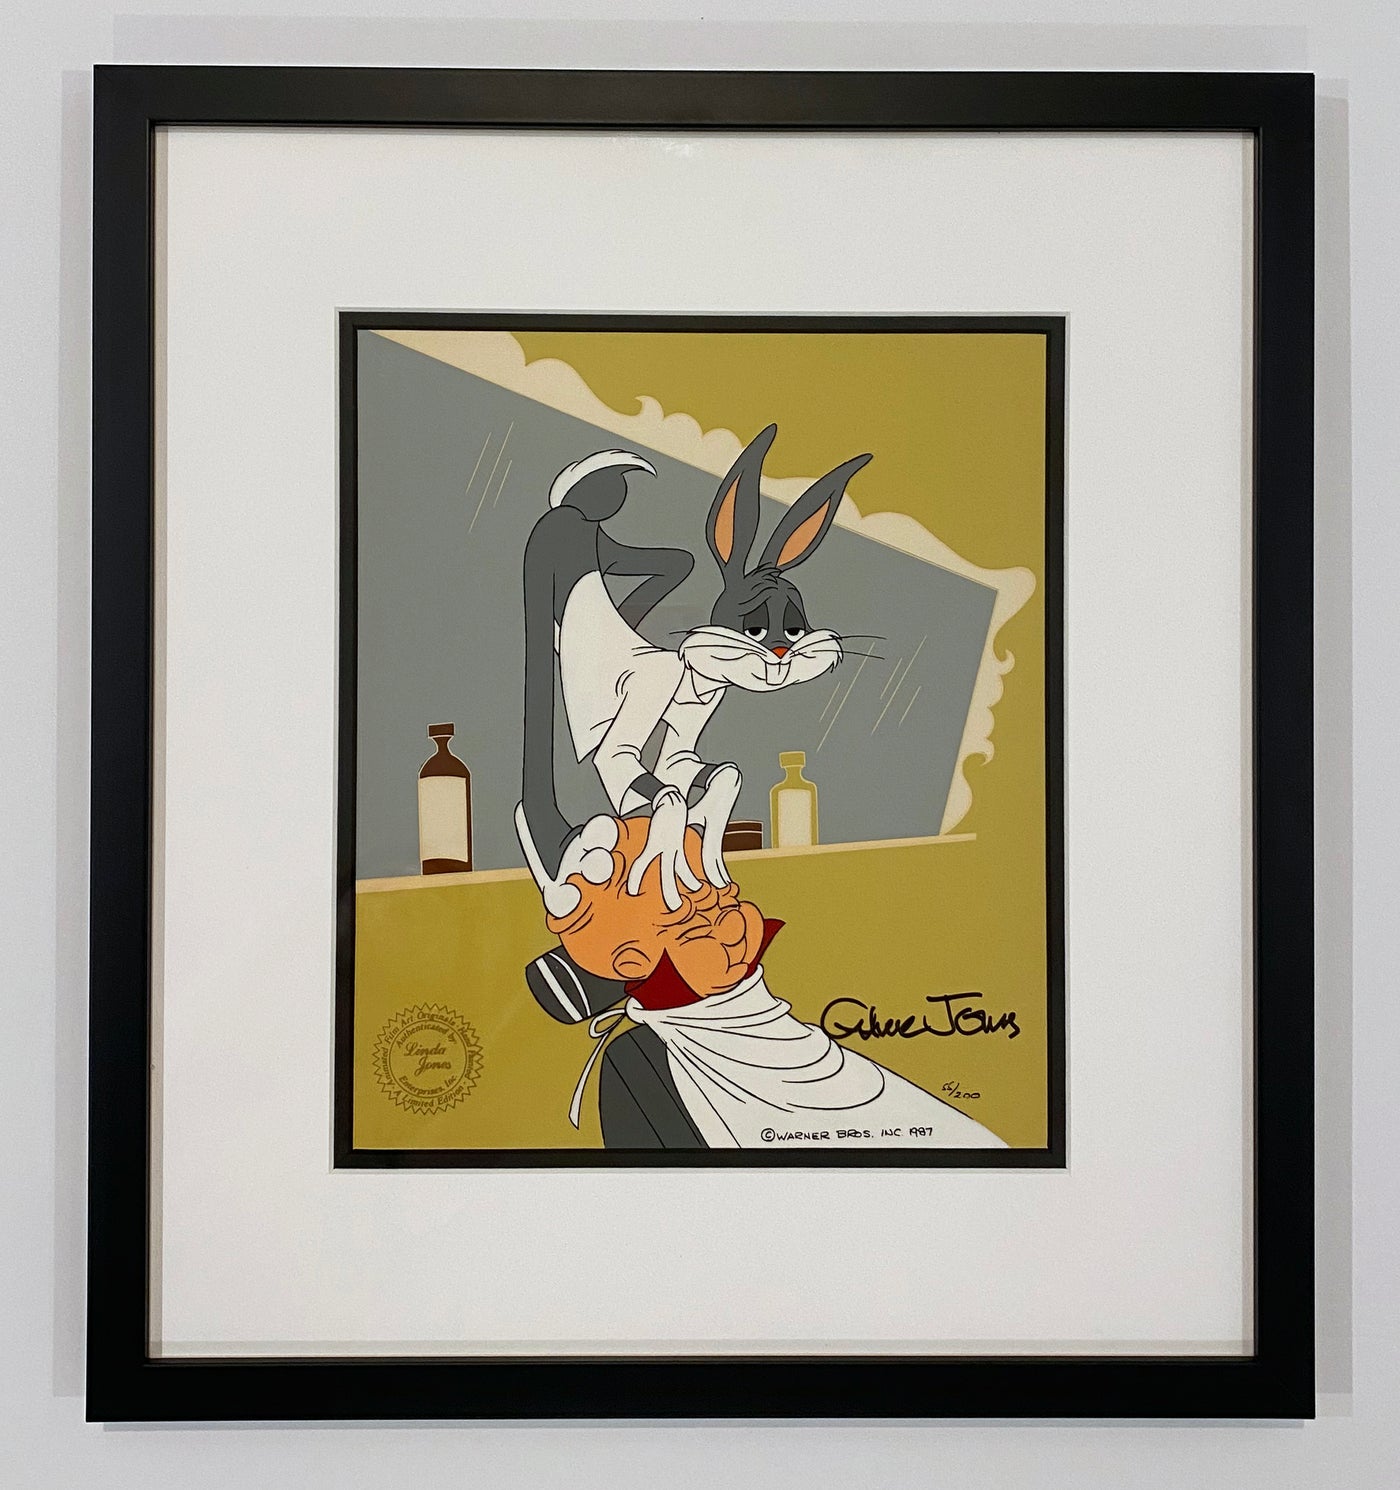 Original Warner Brothers Limited Edition Cel "Rabbit of Seville I" Signed by Chuck Jones